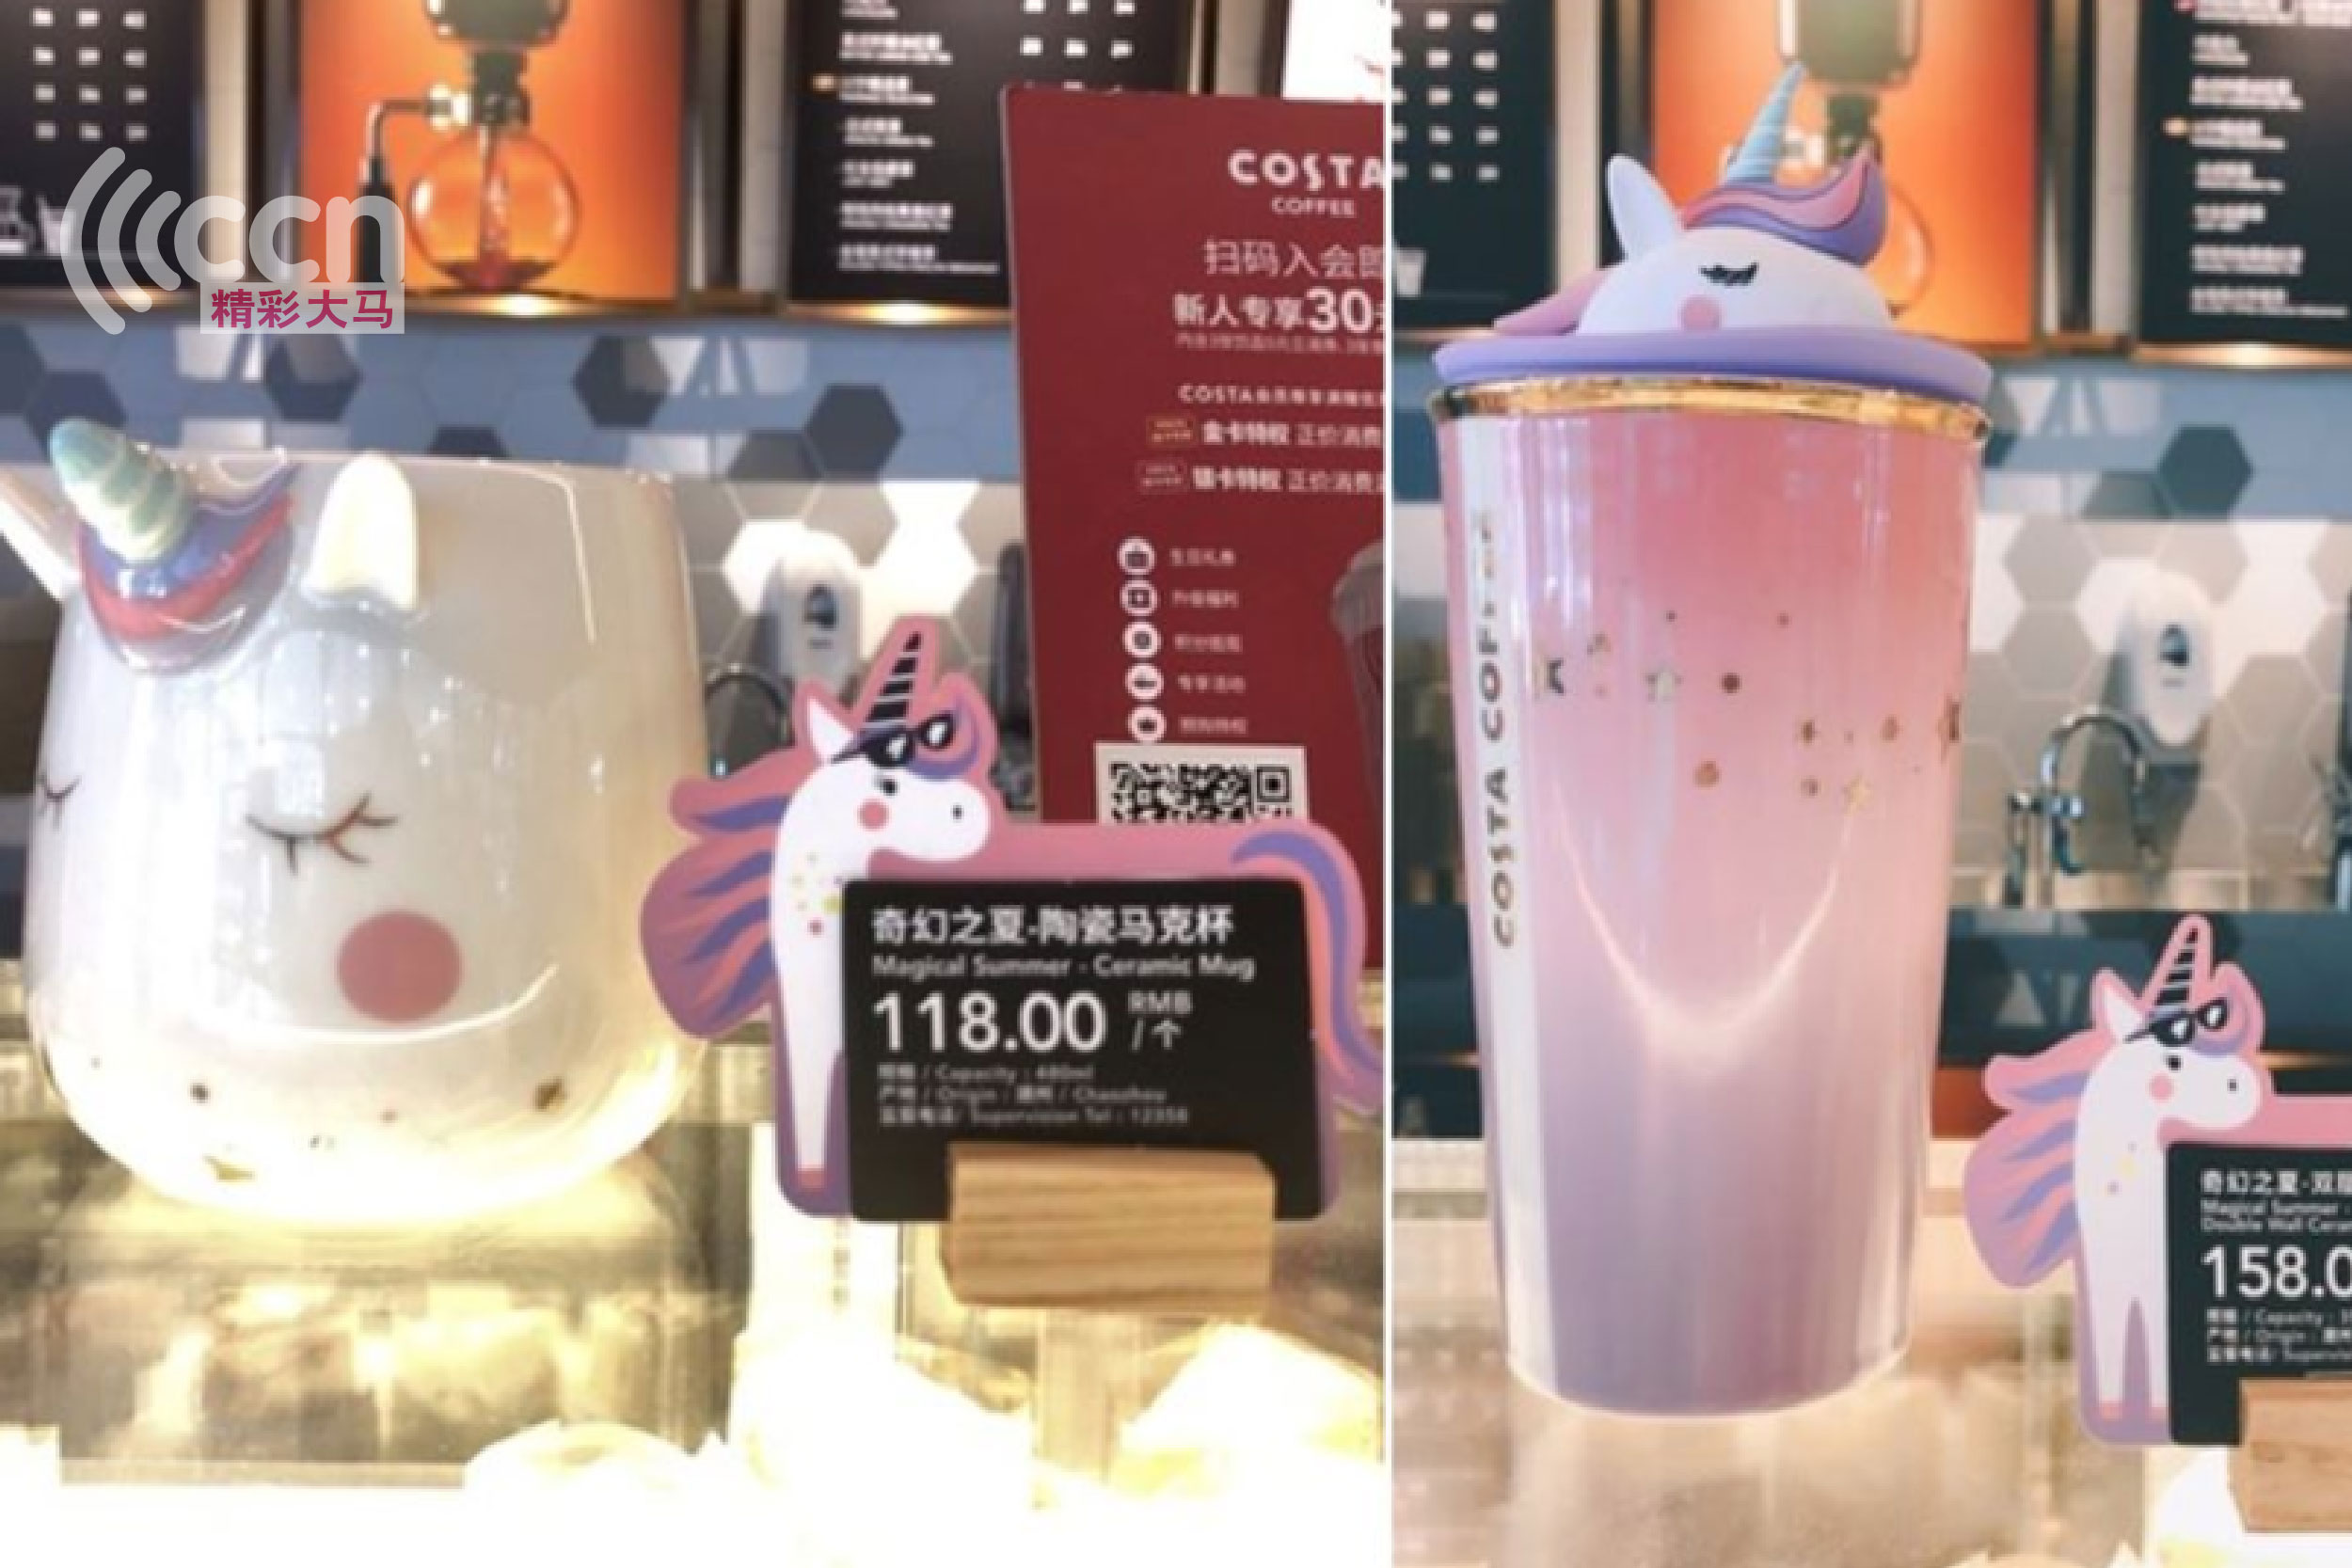 Costa Coffee在中国推出的独角兽系列周边热卖中。-精彩大马制图-